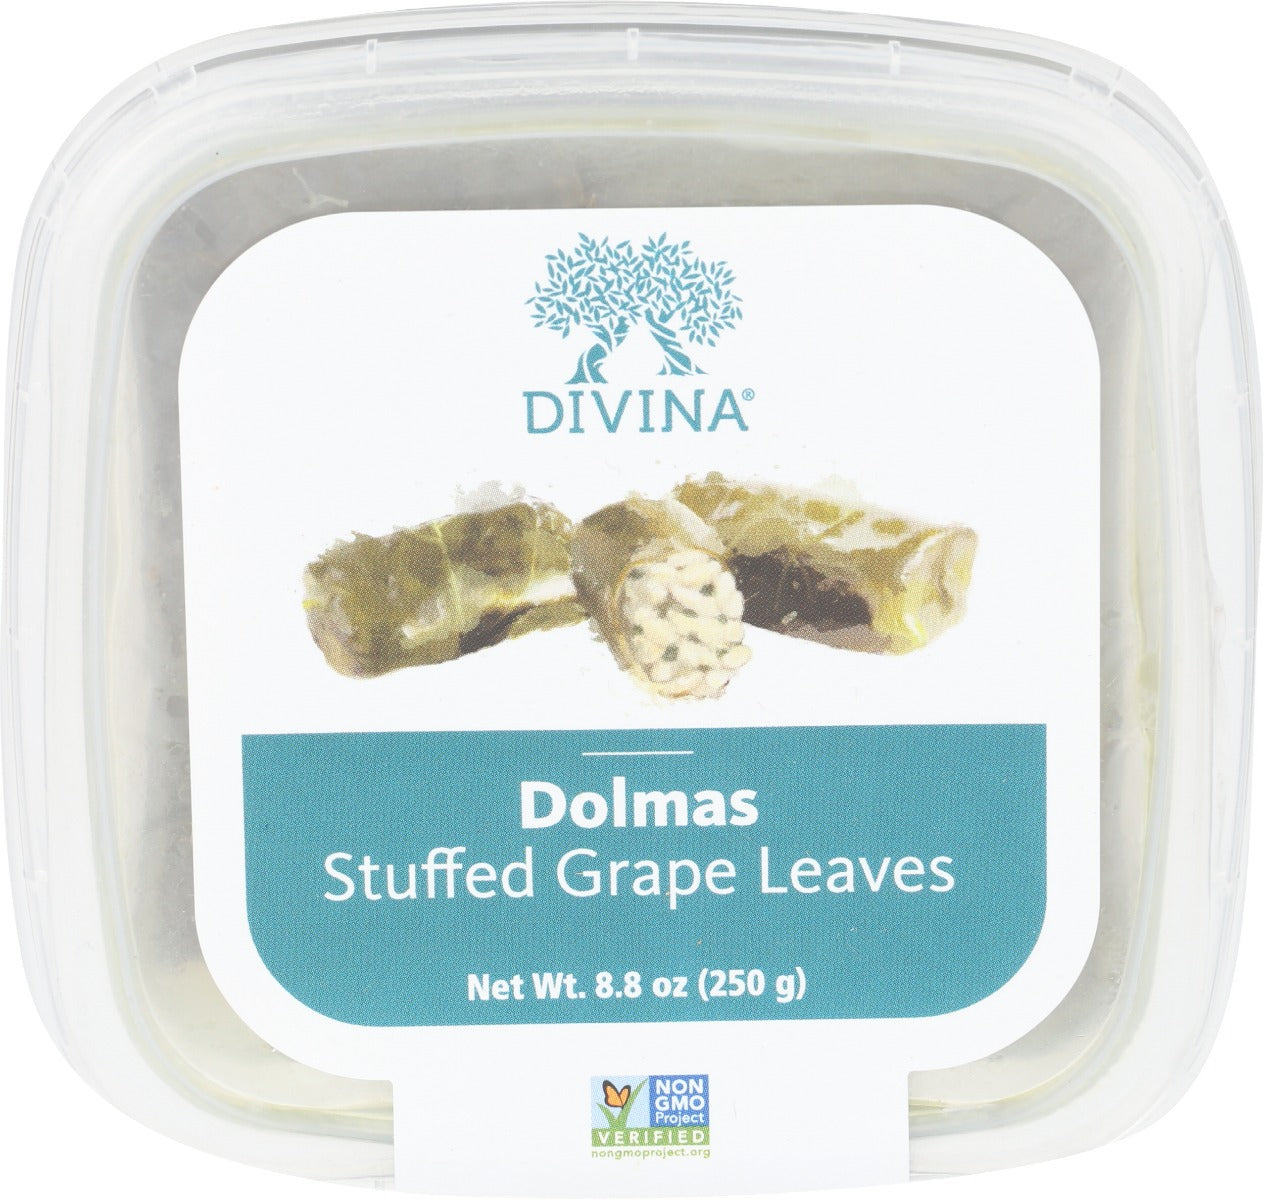 DIVINA: Dolmas Stuffed Grape Leaves Deli Cup, 8.80 oz - Vending Business Solutions